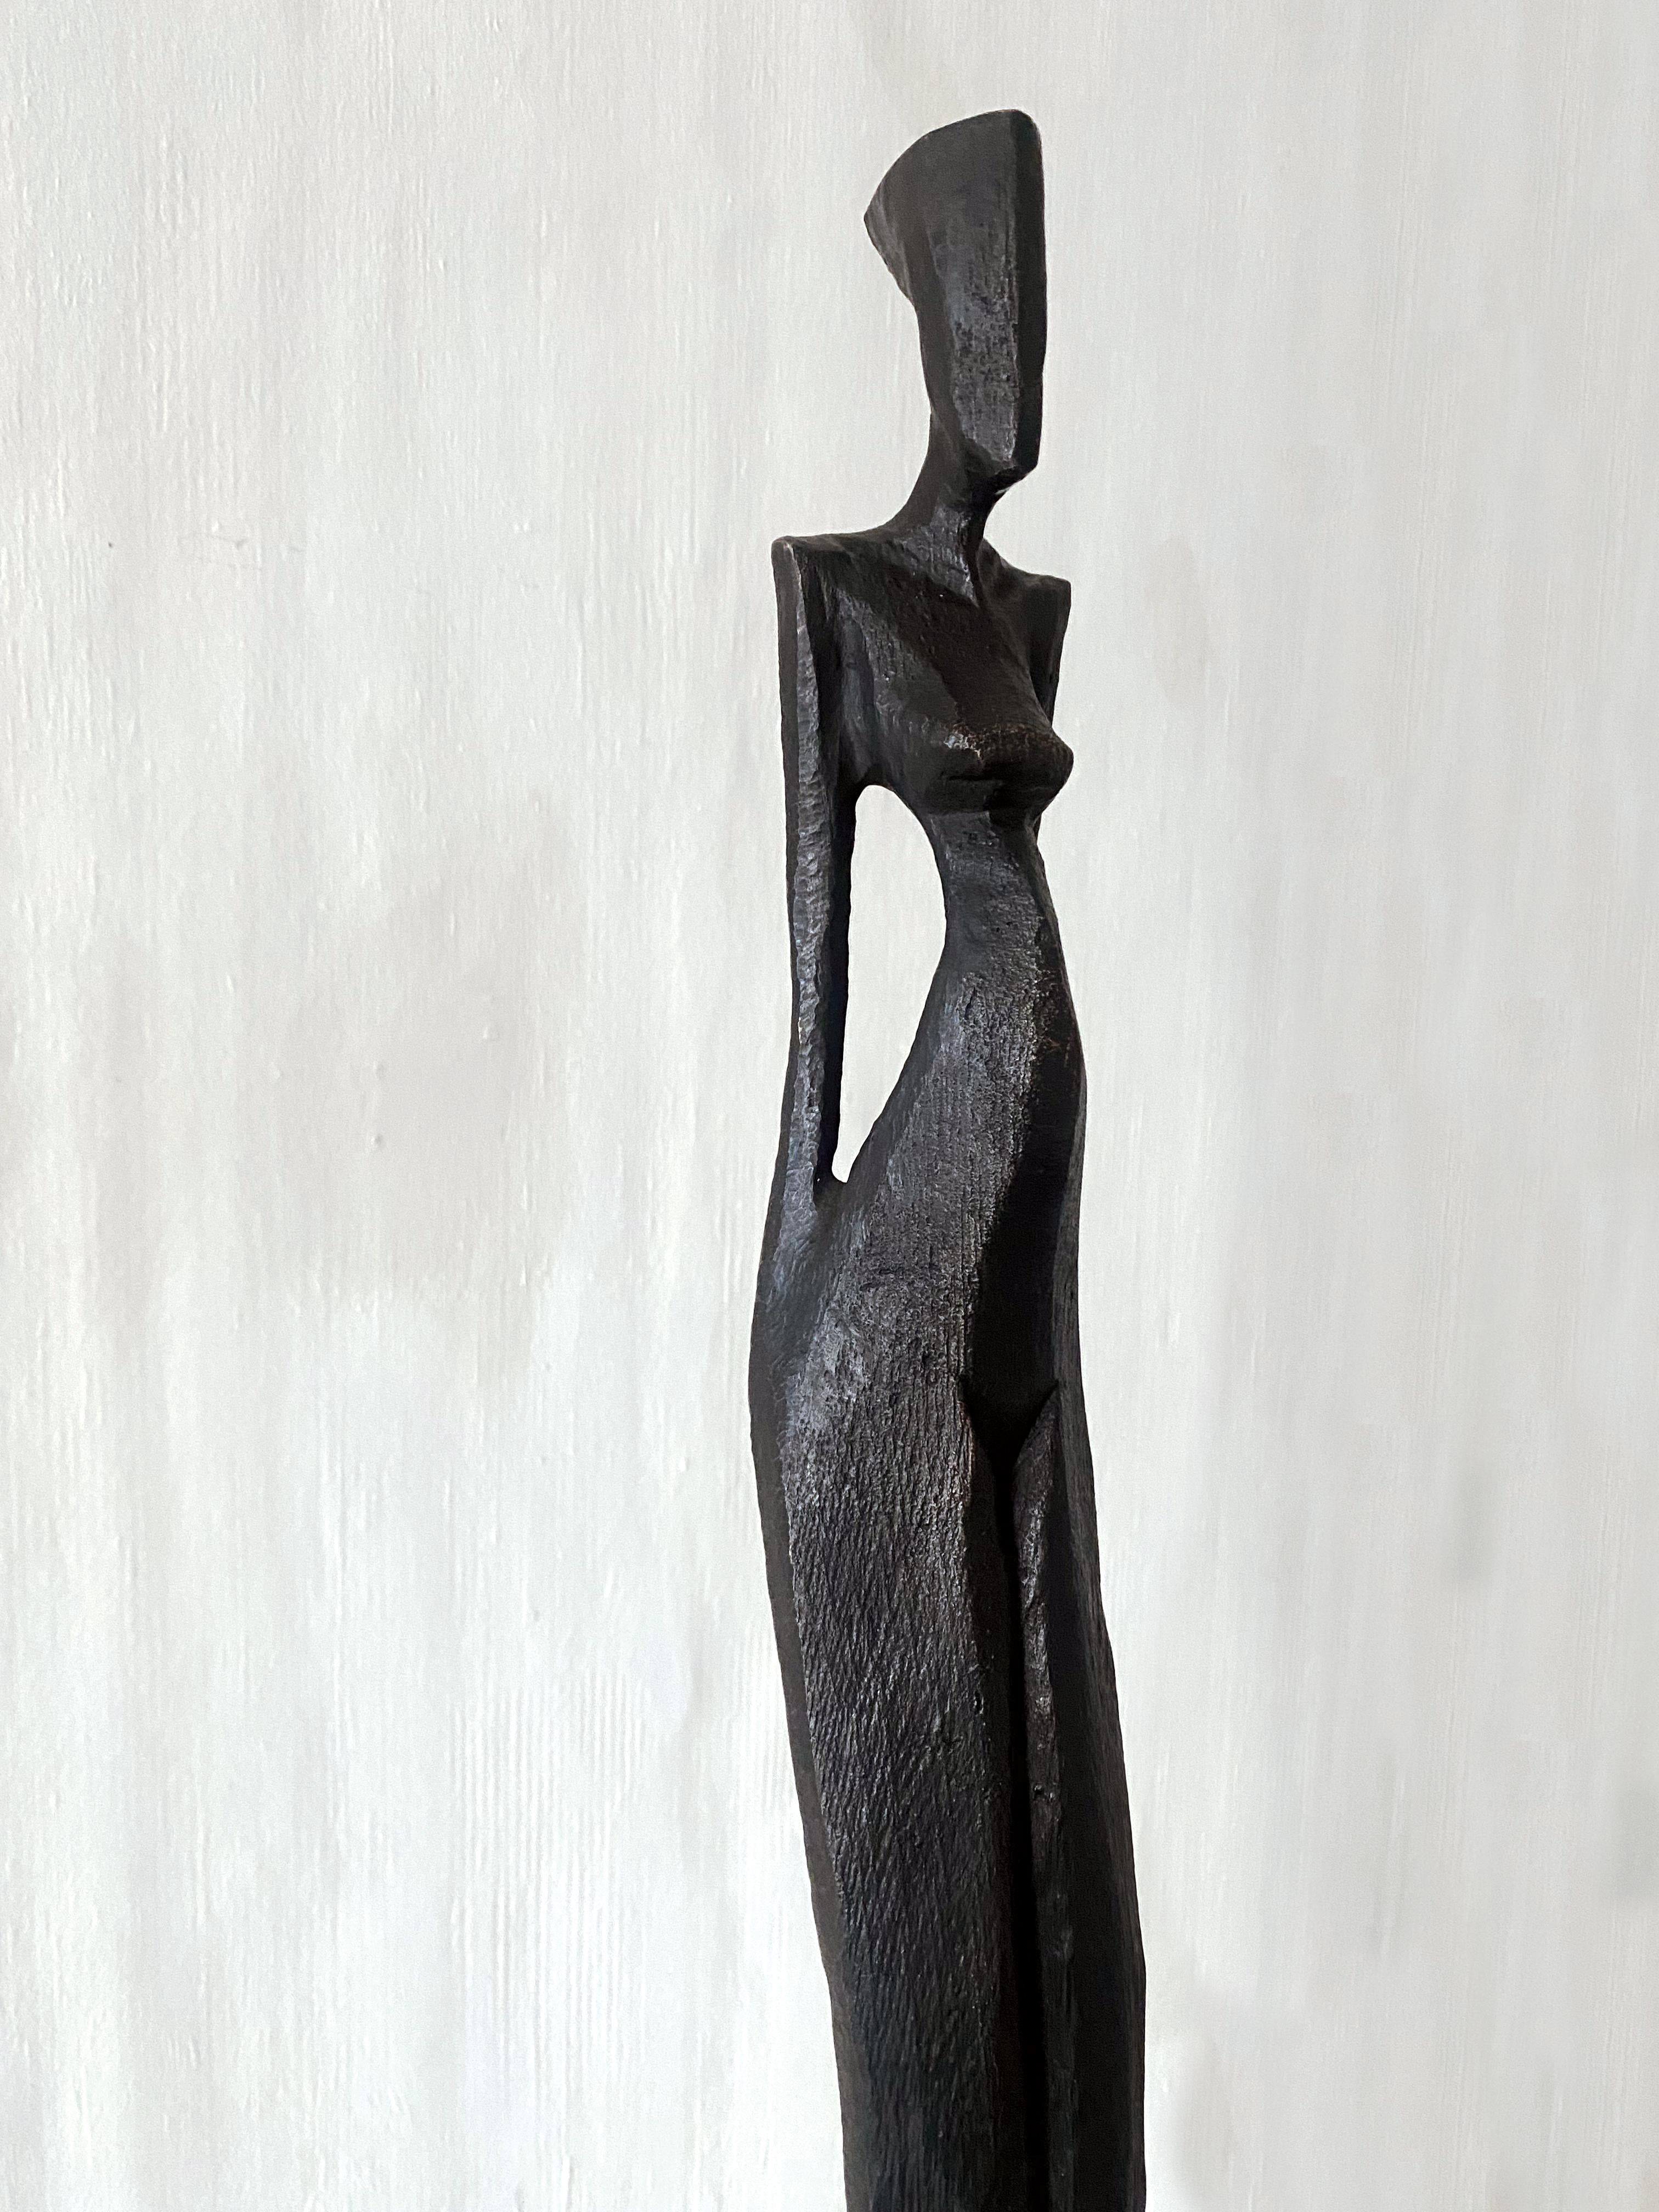 Kathy by Nando Kallweit. Tall, elegant bronze sculpture of human figure. 3